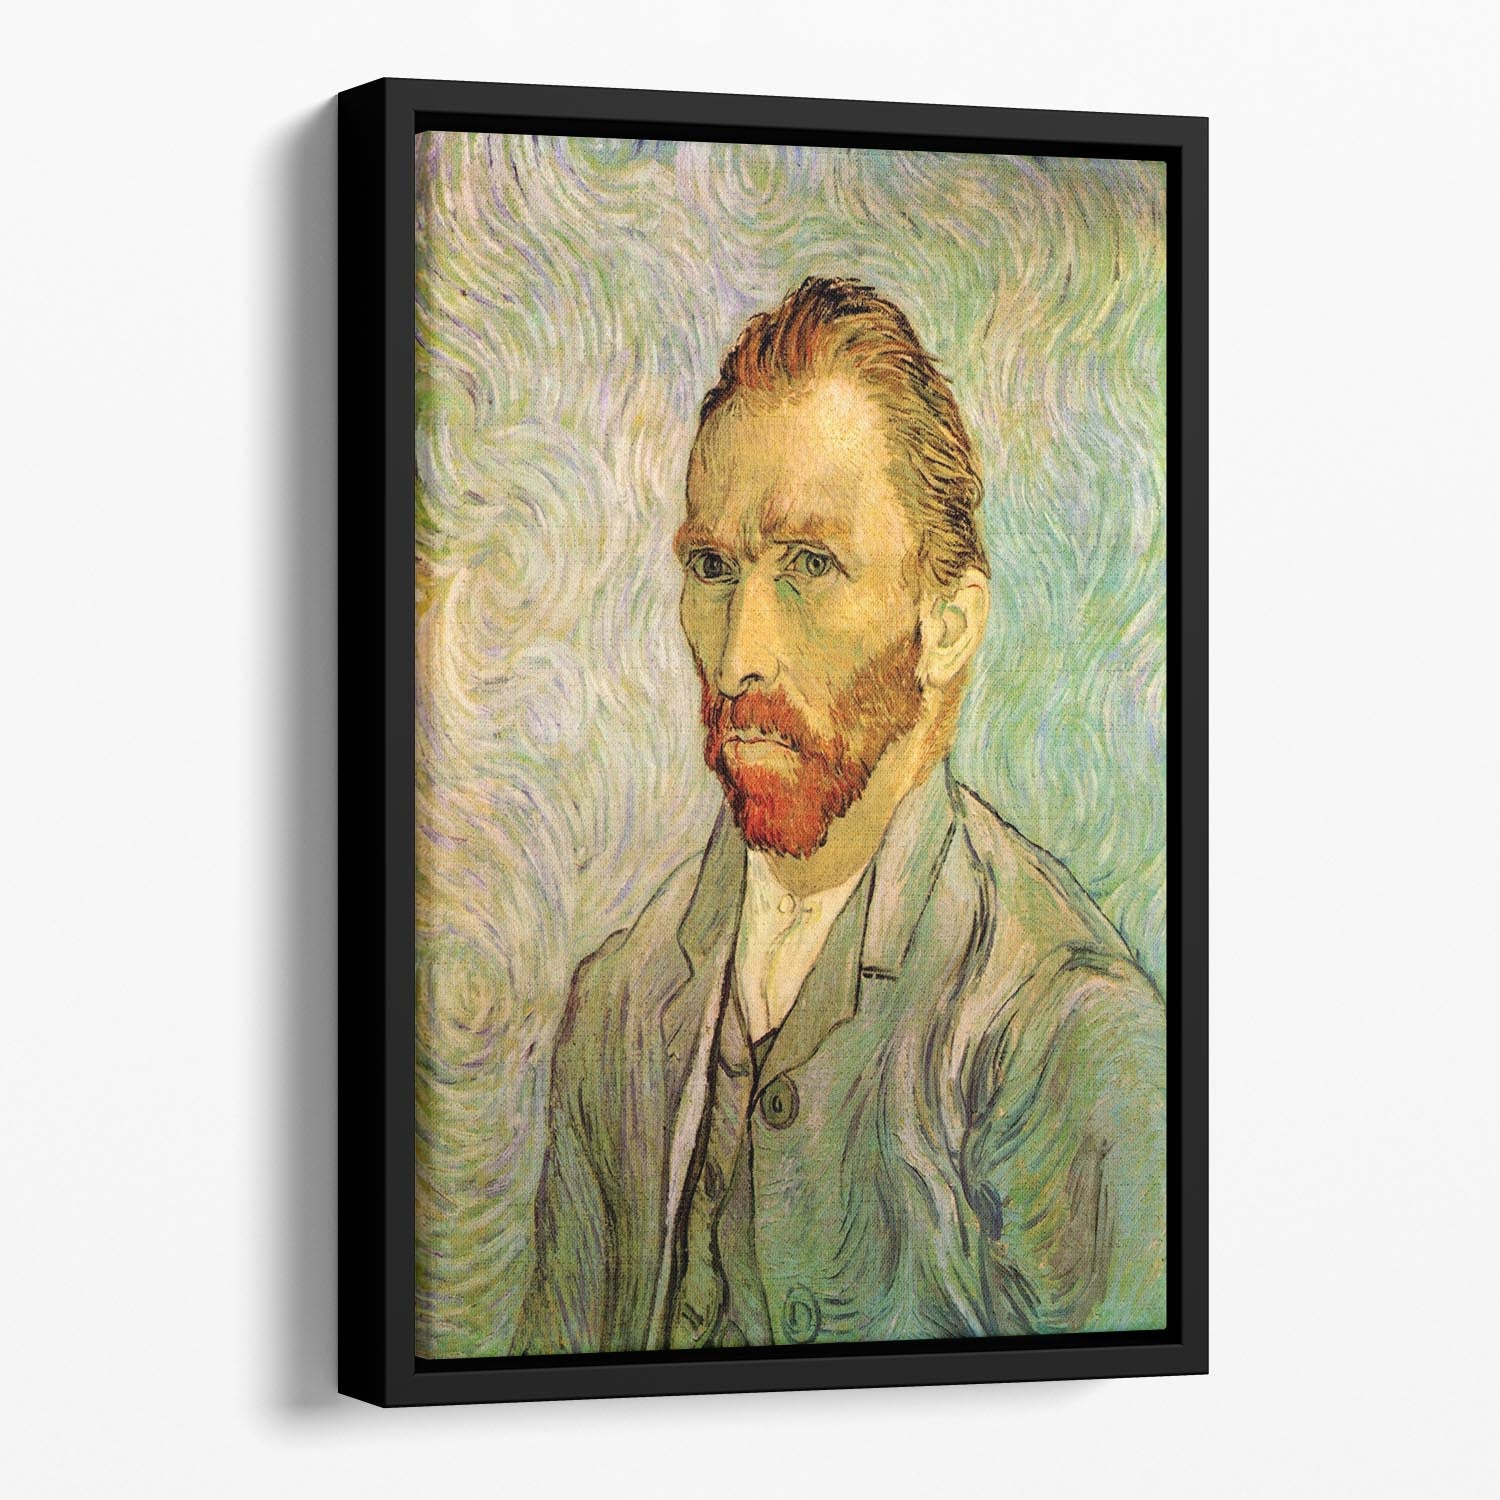 Self-Portrait 2 by Van Gogh Floating Framed Canvas